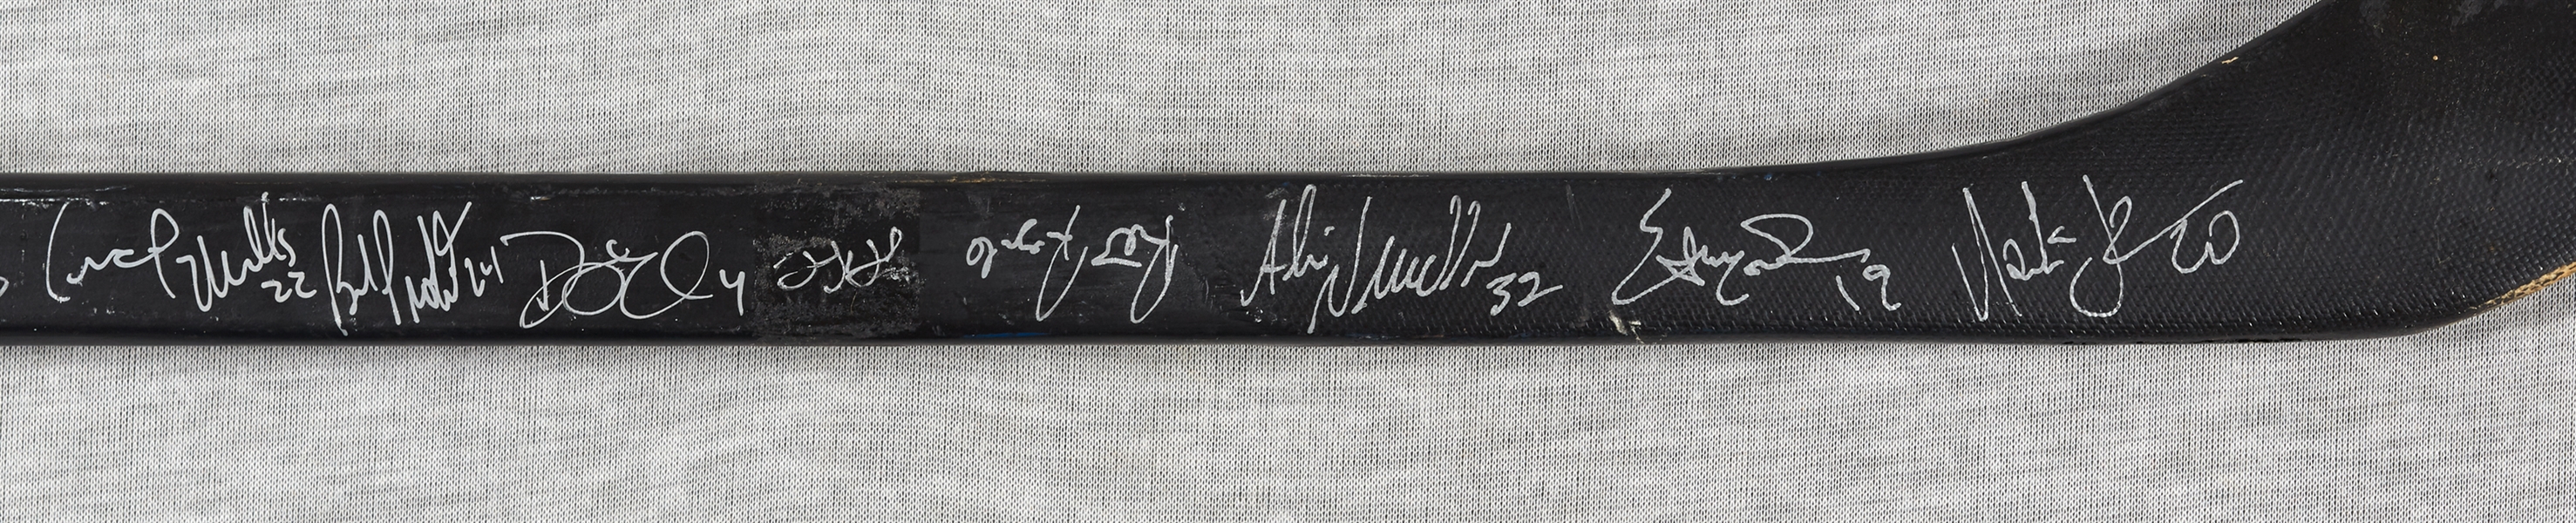 1998-99 Chicago Blackhawks Team-Signed Krivokrasov Game-Used Hockey Stick (BAS)